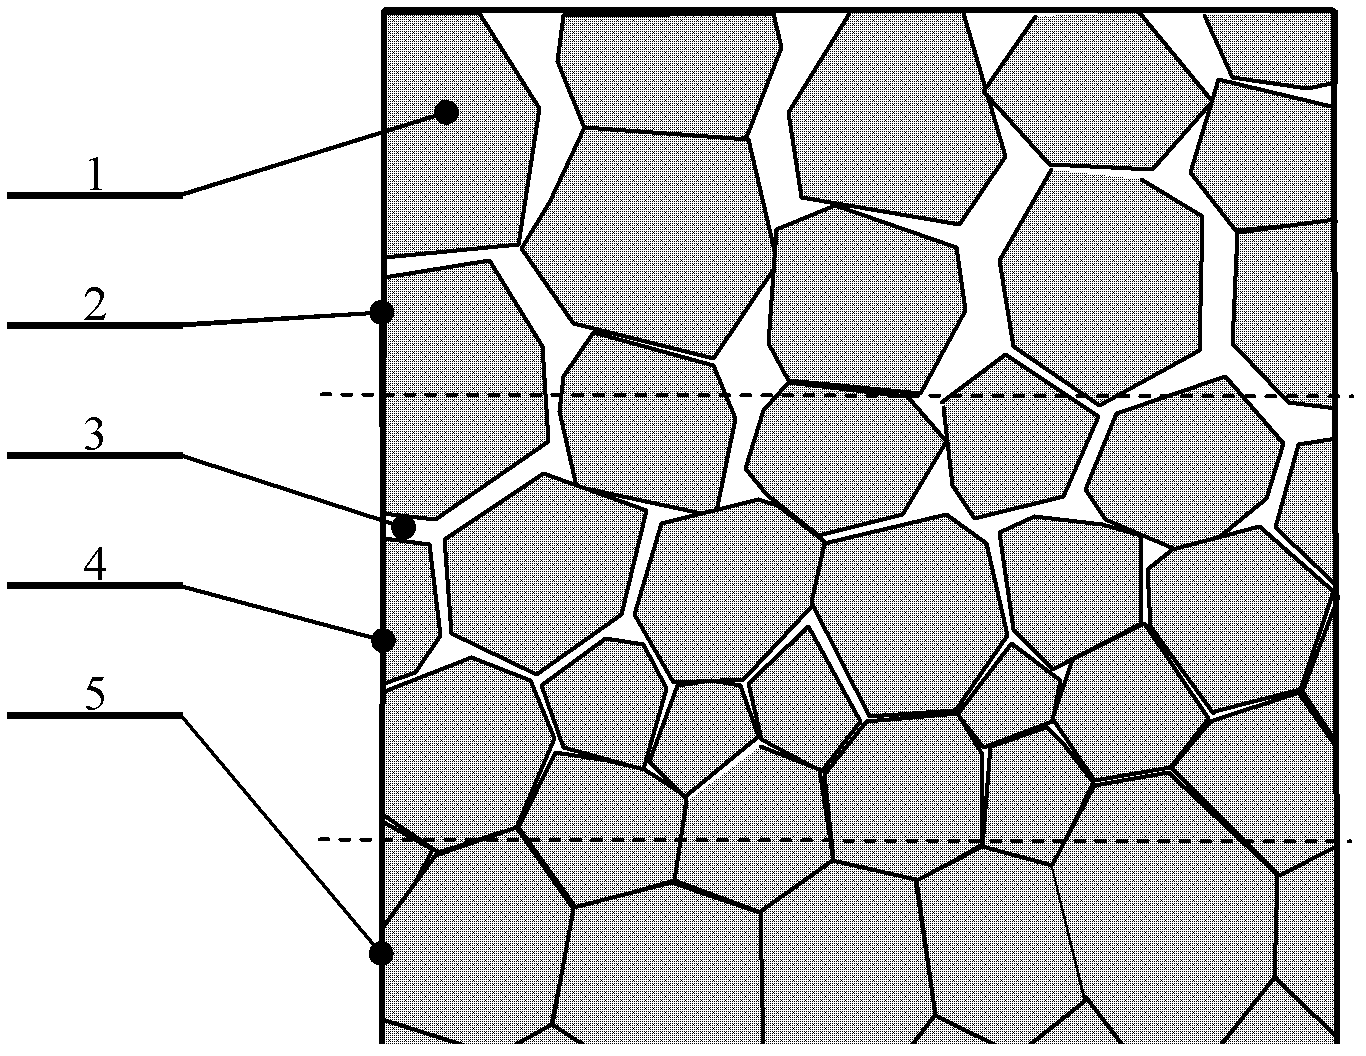 Antifoaming gradient porous structure in plasma-facing material